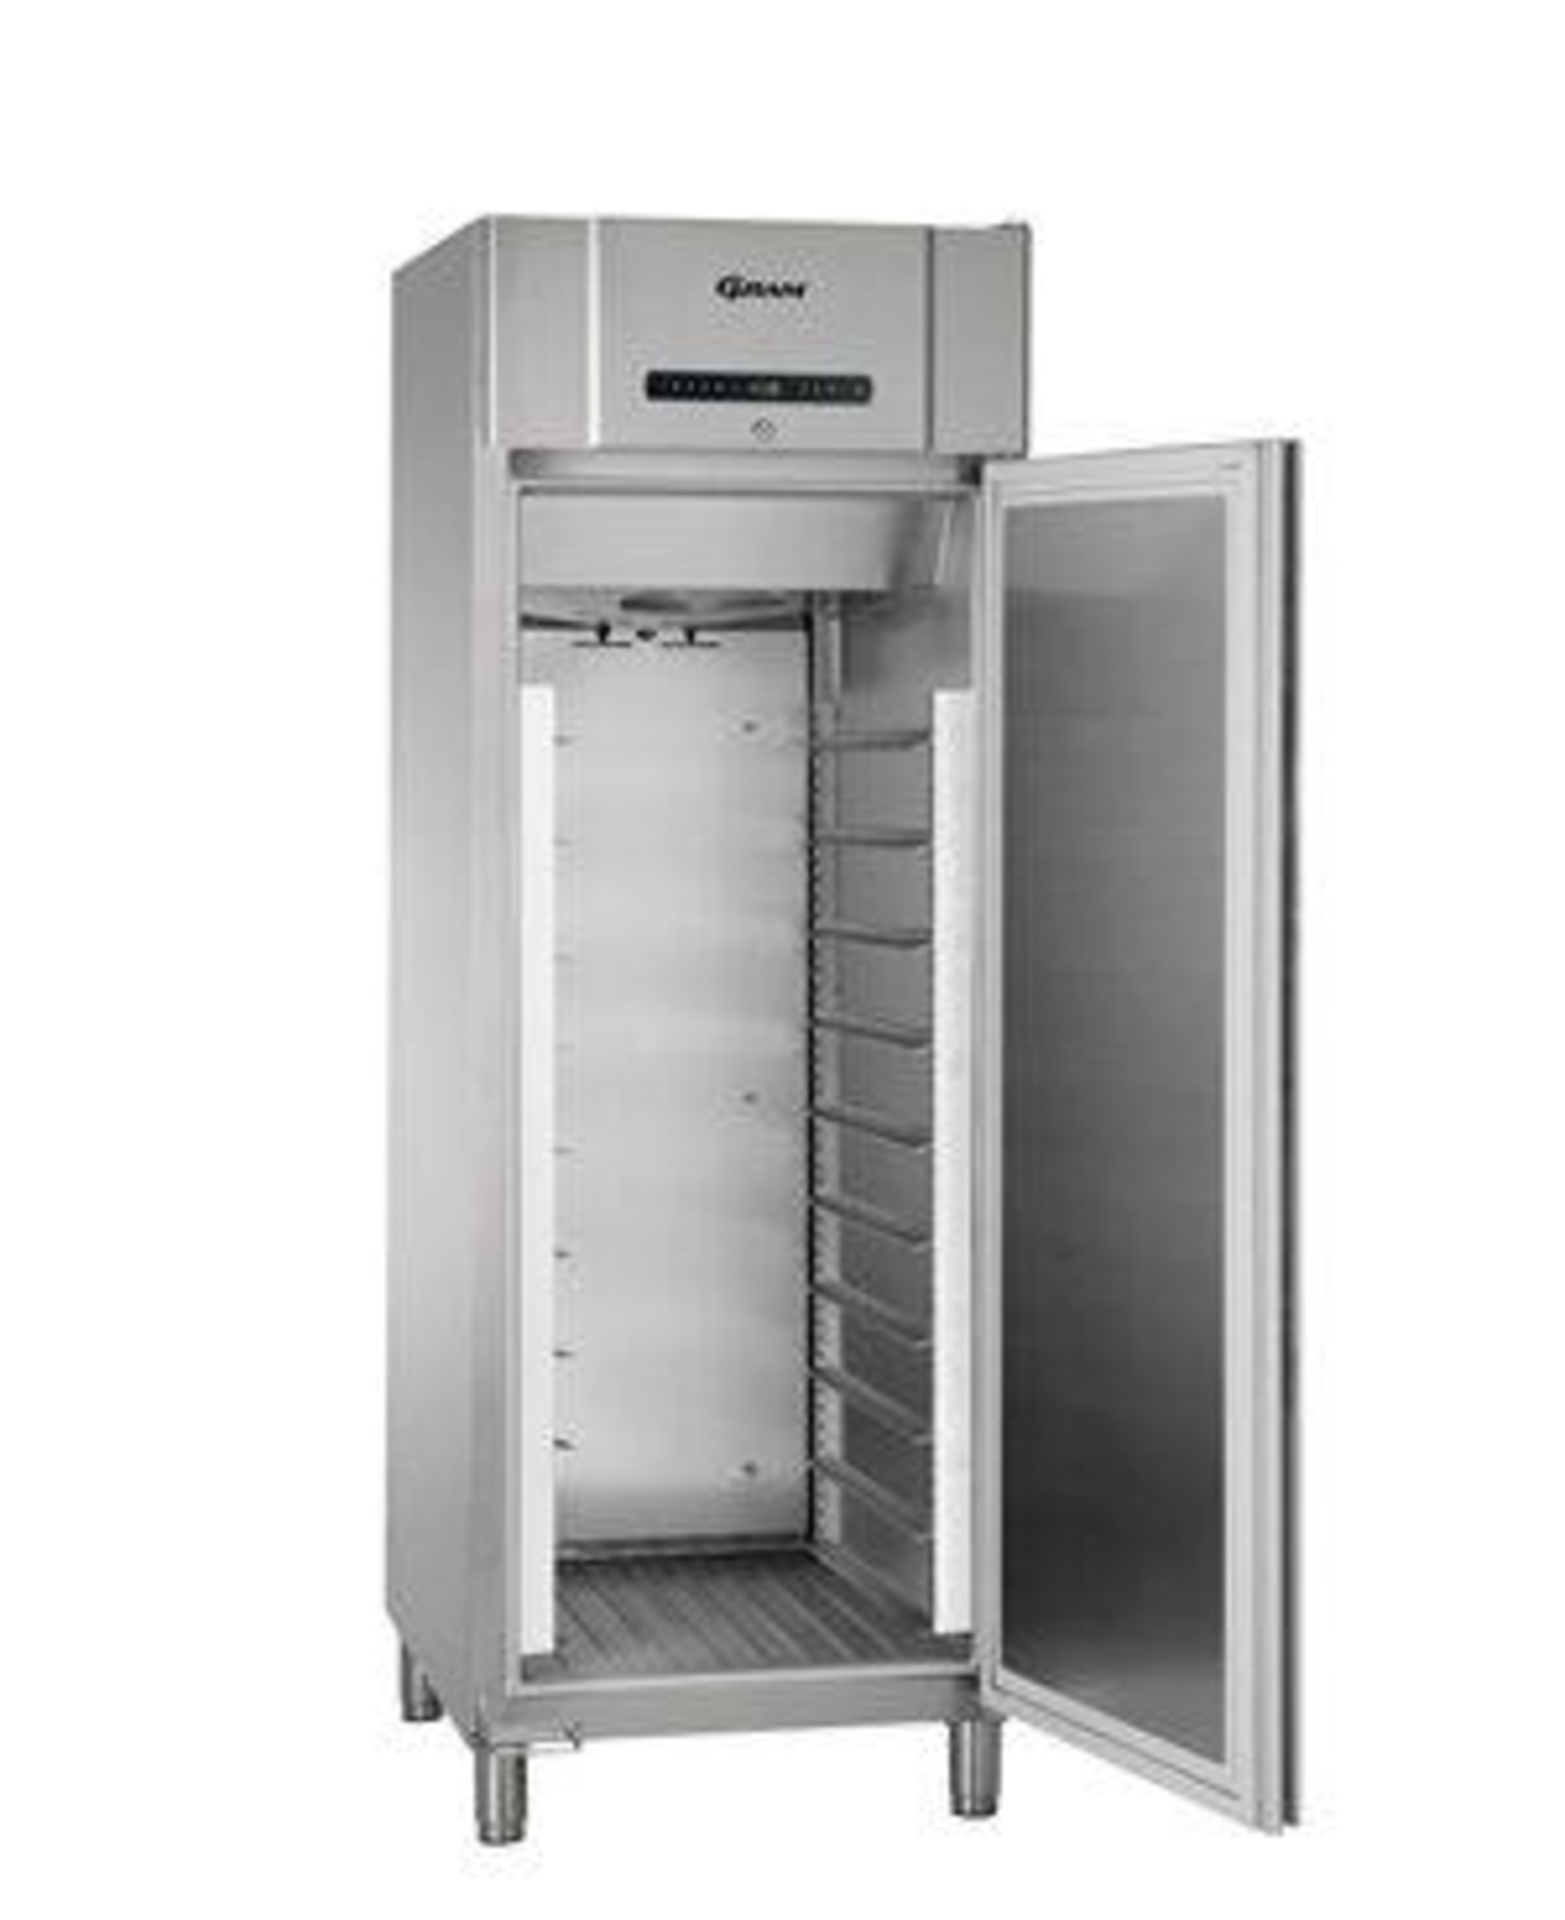 BAKER F 610 RG L2 10A Commercial Freezer - Image 2 of 3